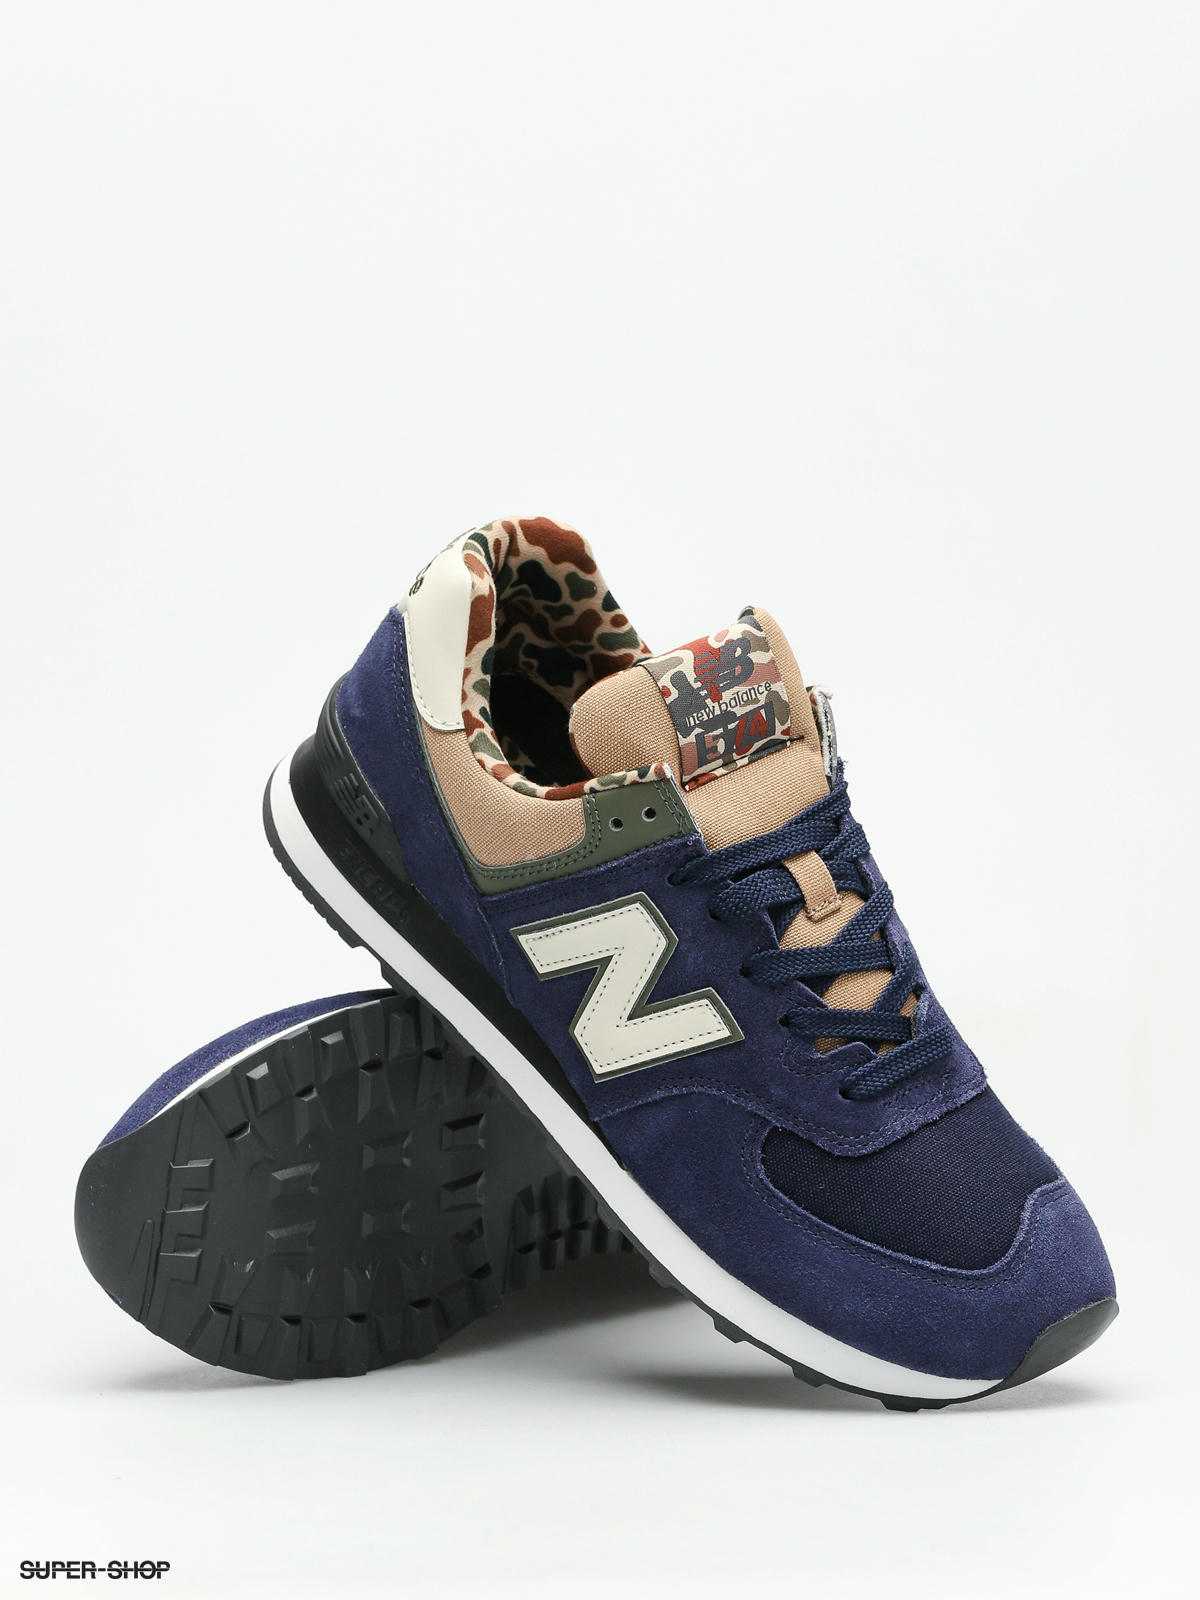 New Balance Shoes 574 (pigment)